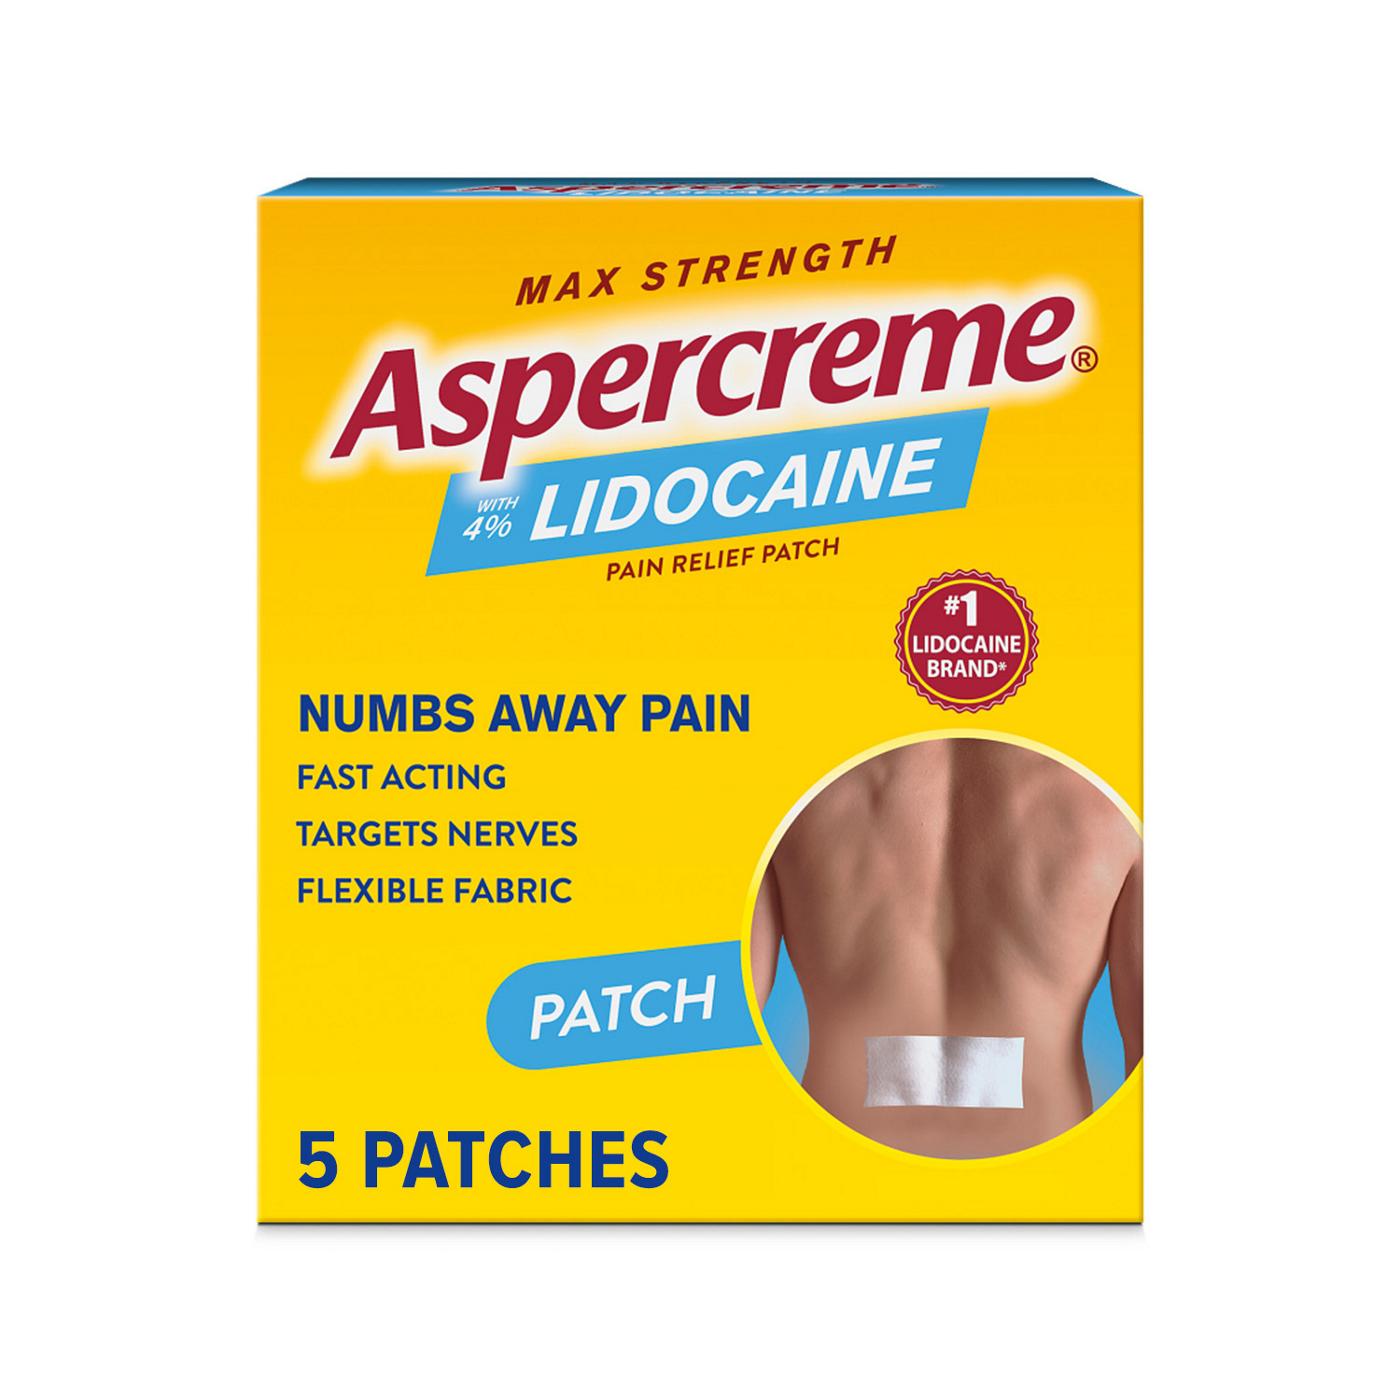 Aspercreme Lidocaine Pain Relief Patch; image 1 of 7